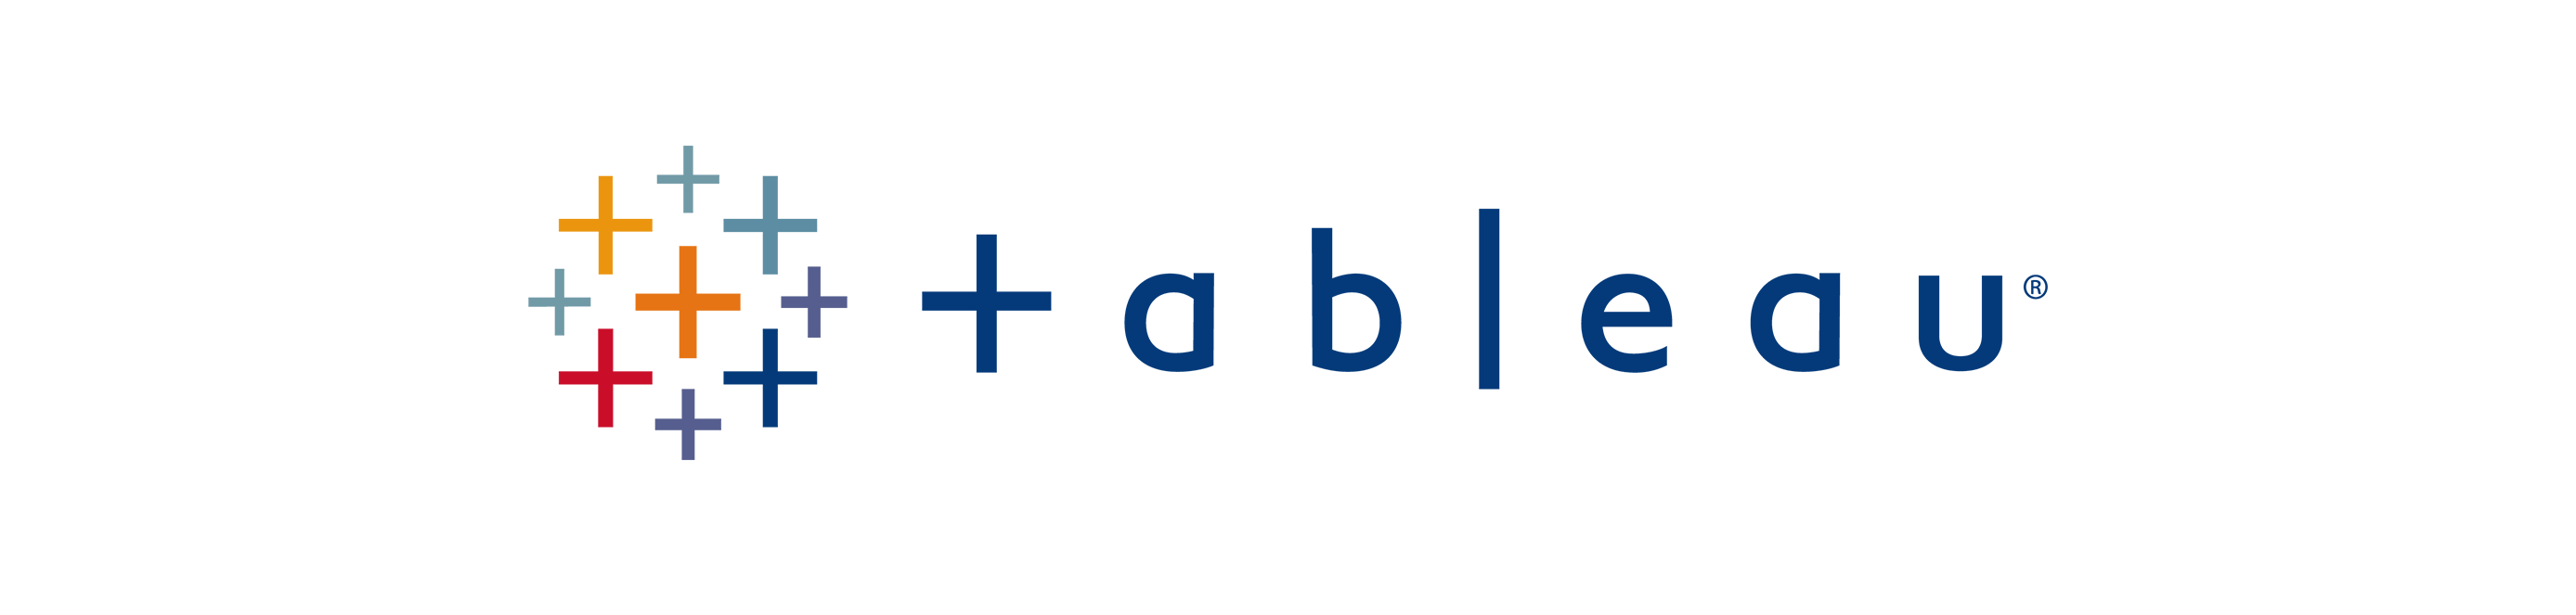 Martech-Tableau-Logo